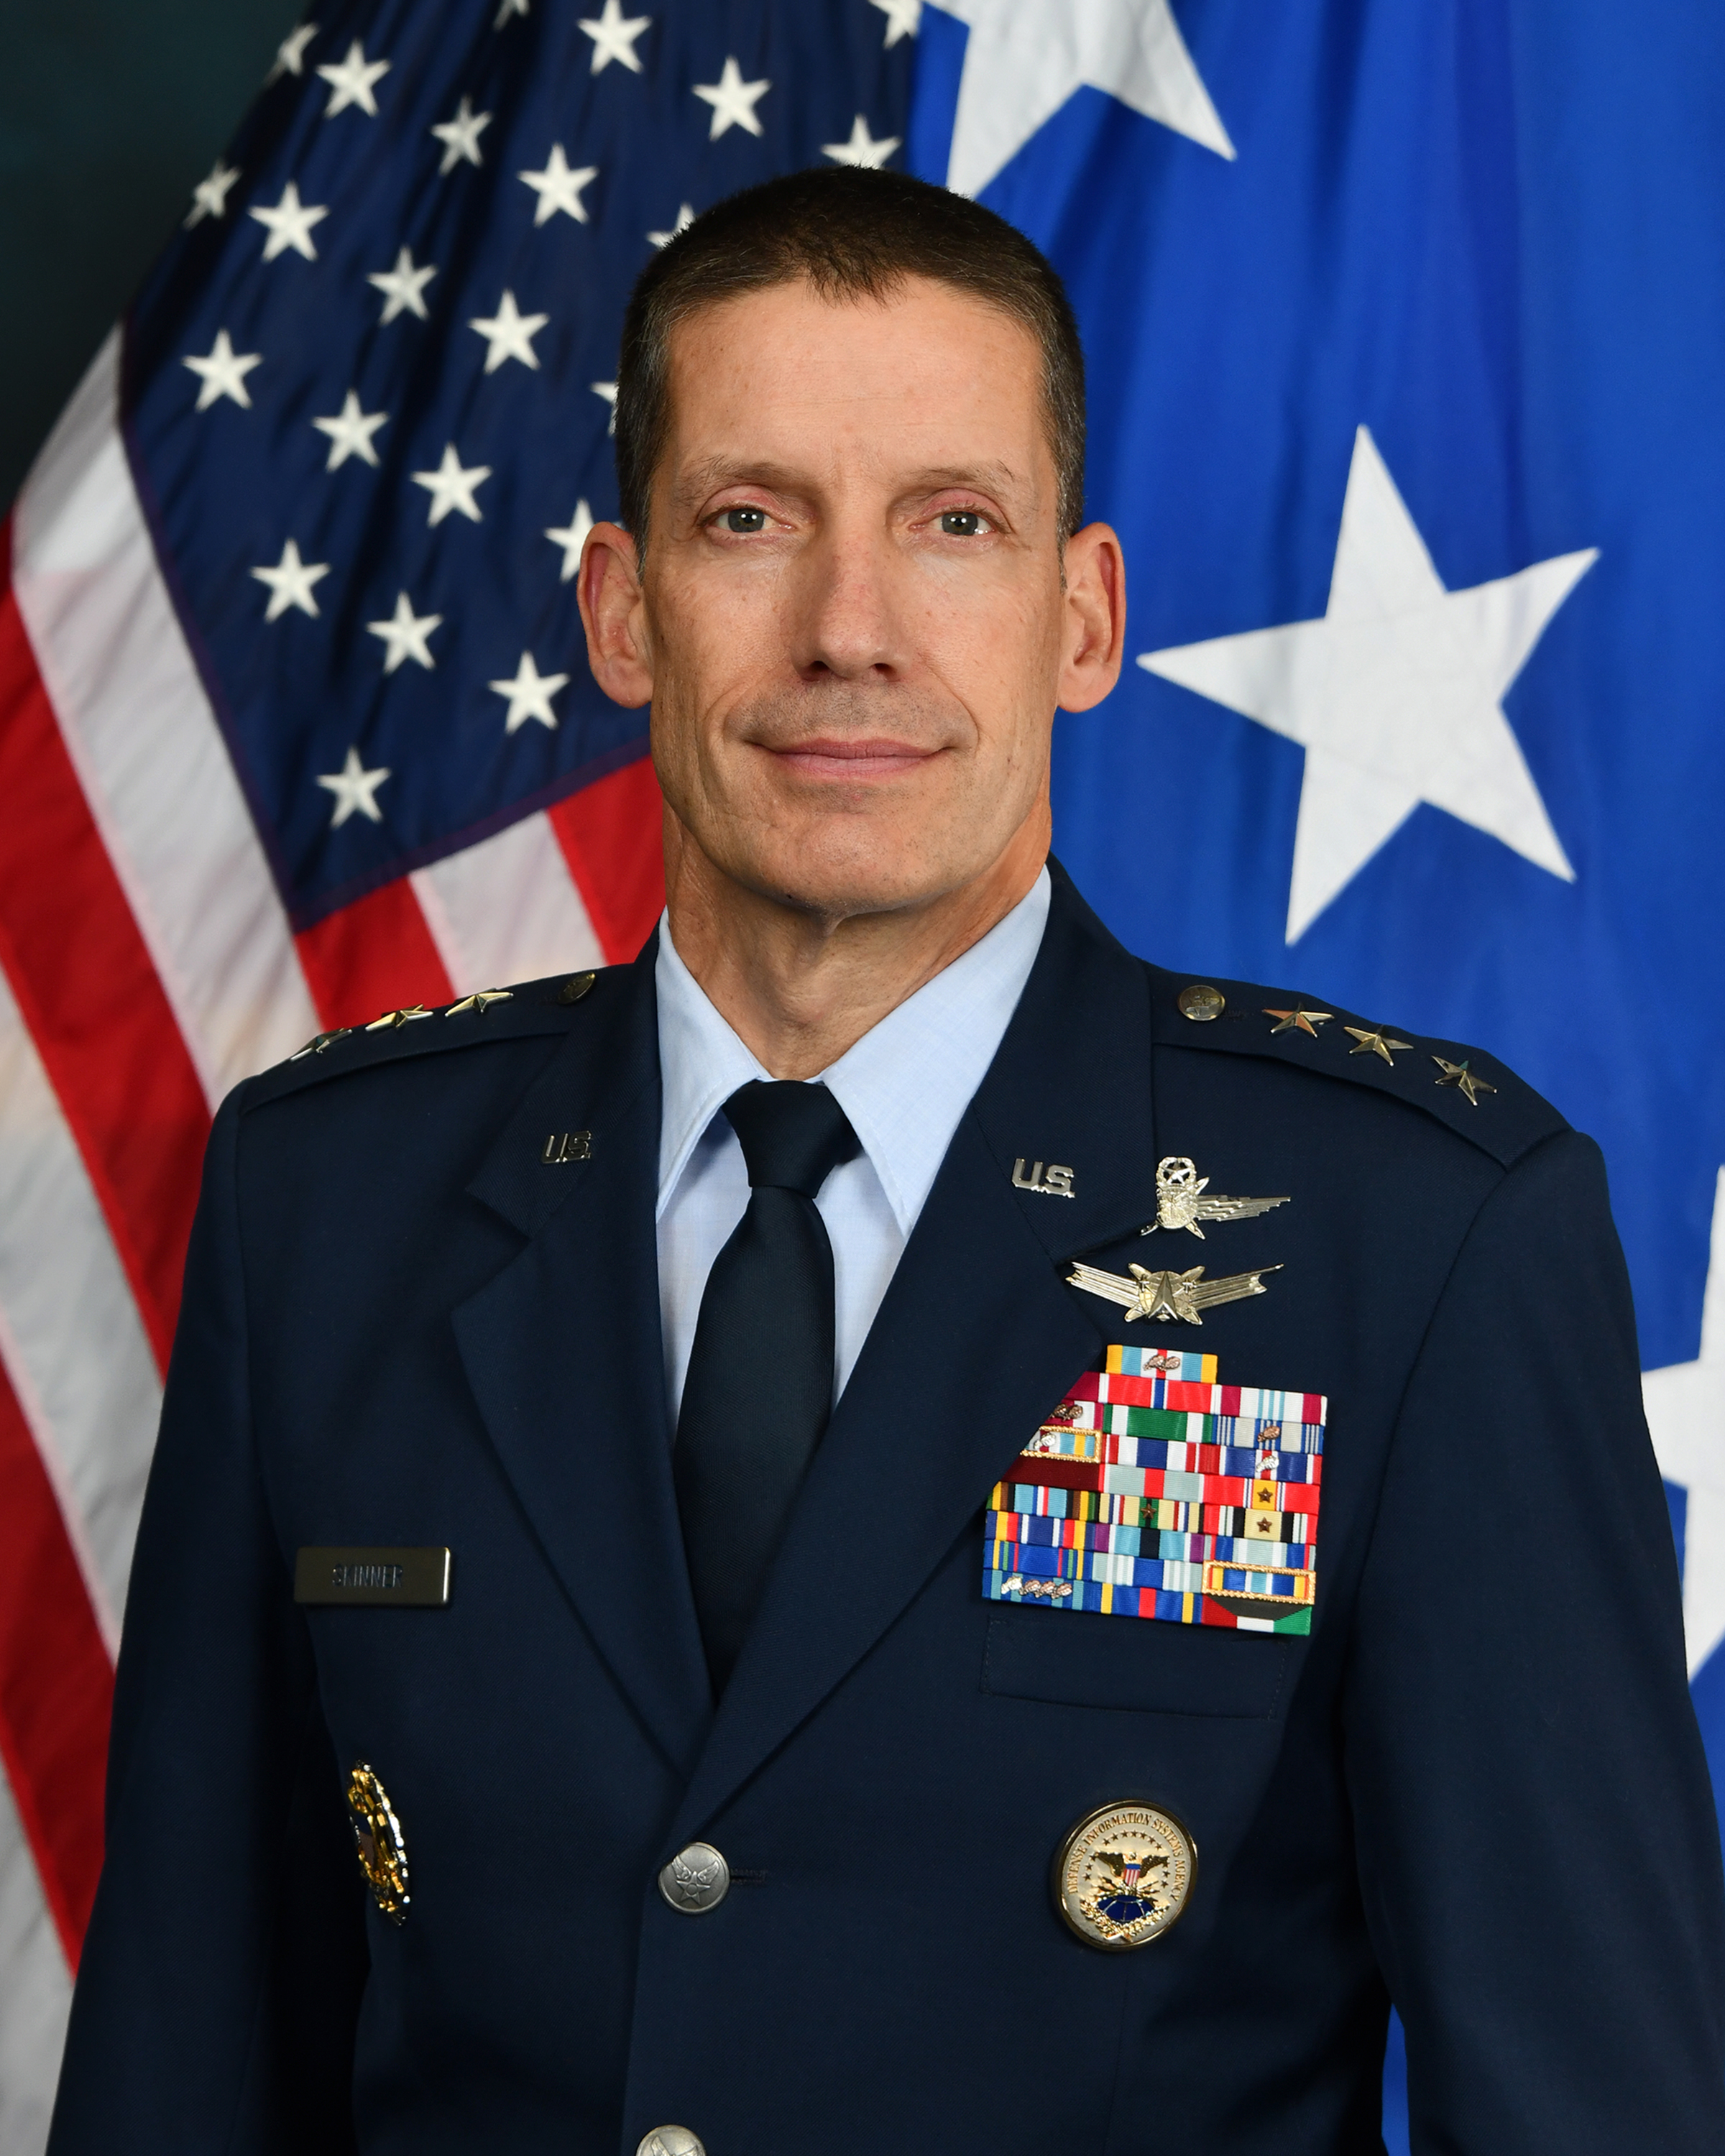 Air Force Lt. Gen. Robert J. Skinner